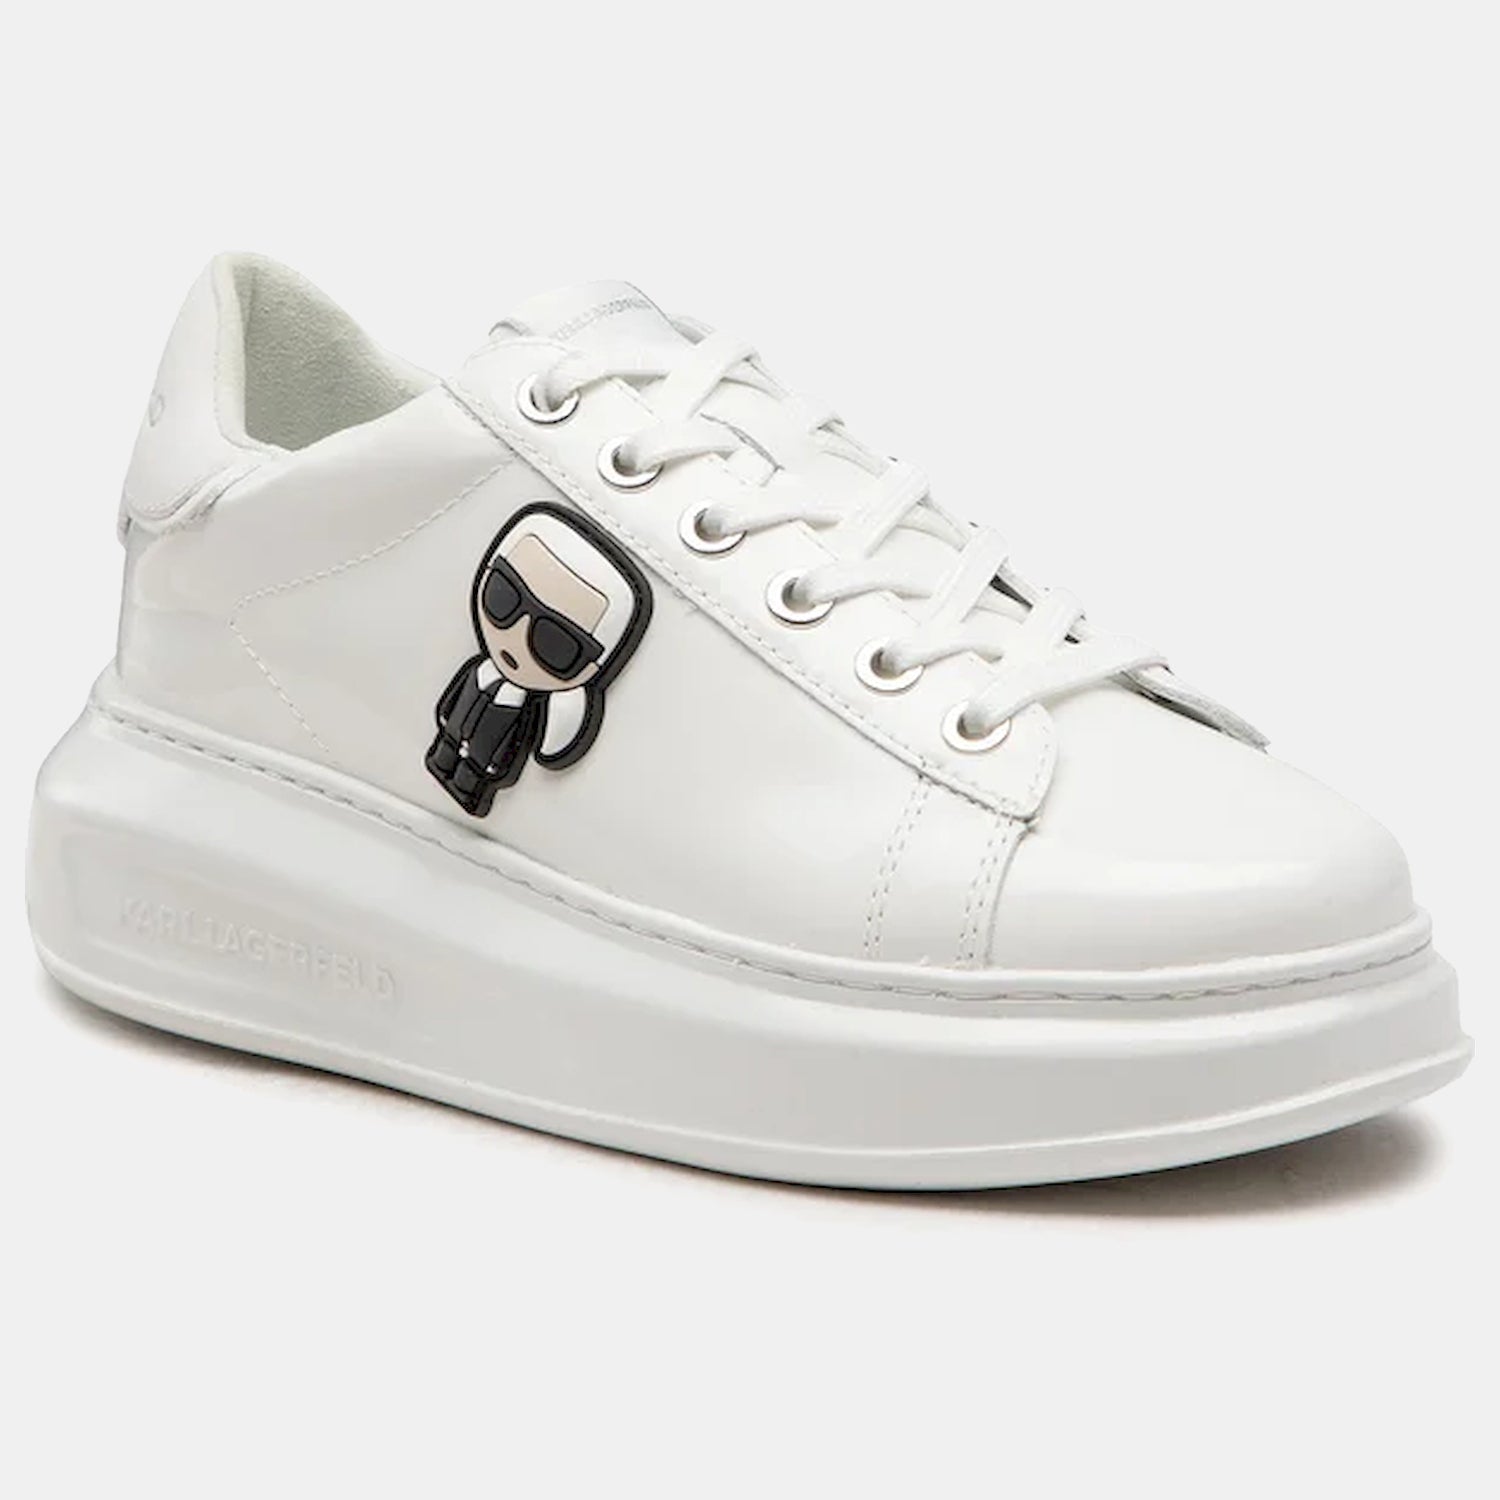 Karl Lagerfeld Sapatilhas Sneakers Shoes Kl62530u White Vern Branco Verniz_shot5